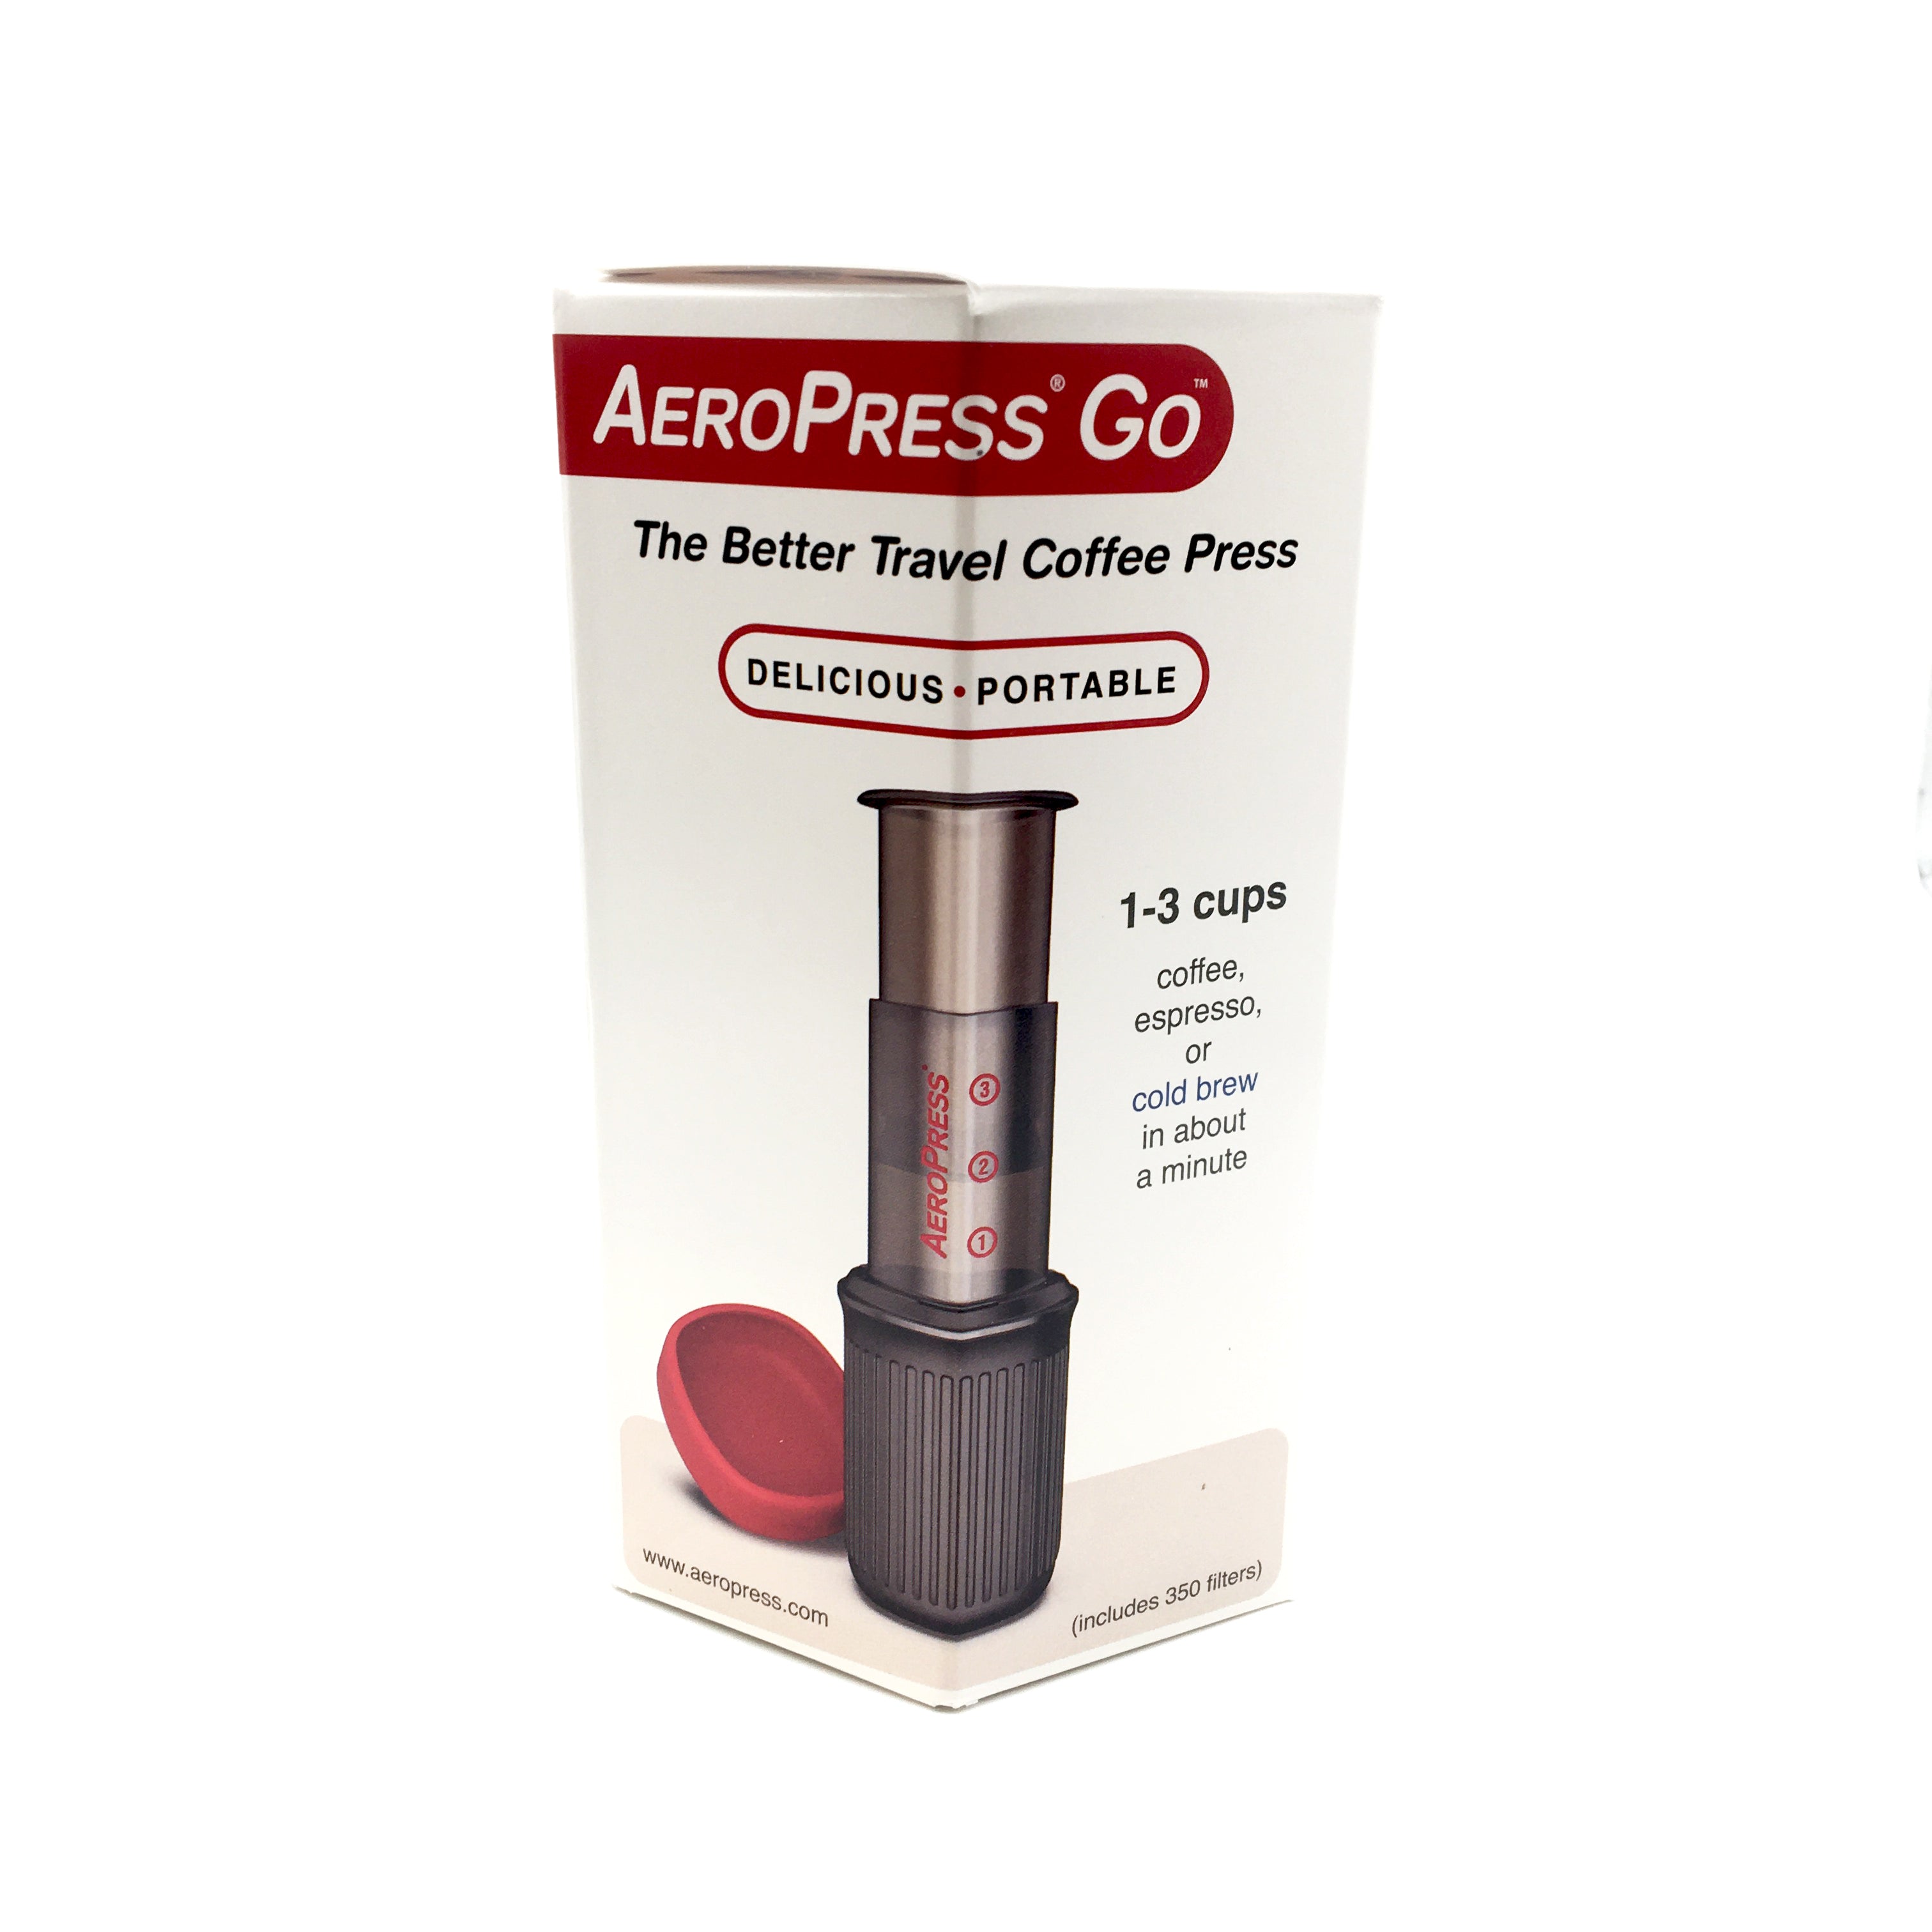 AeroPress Go Travel Coffee Press